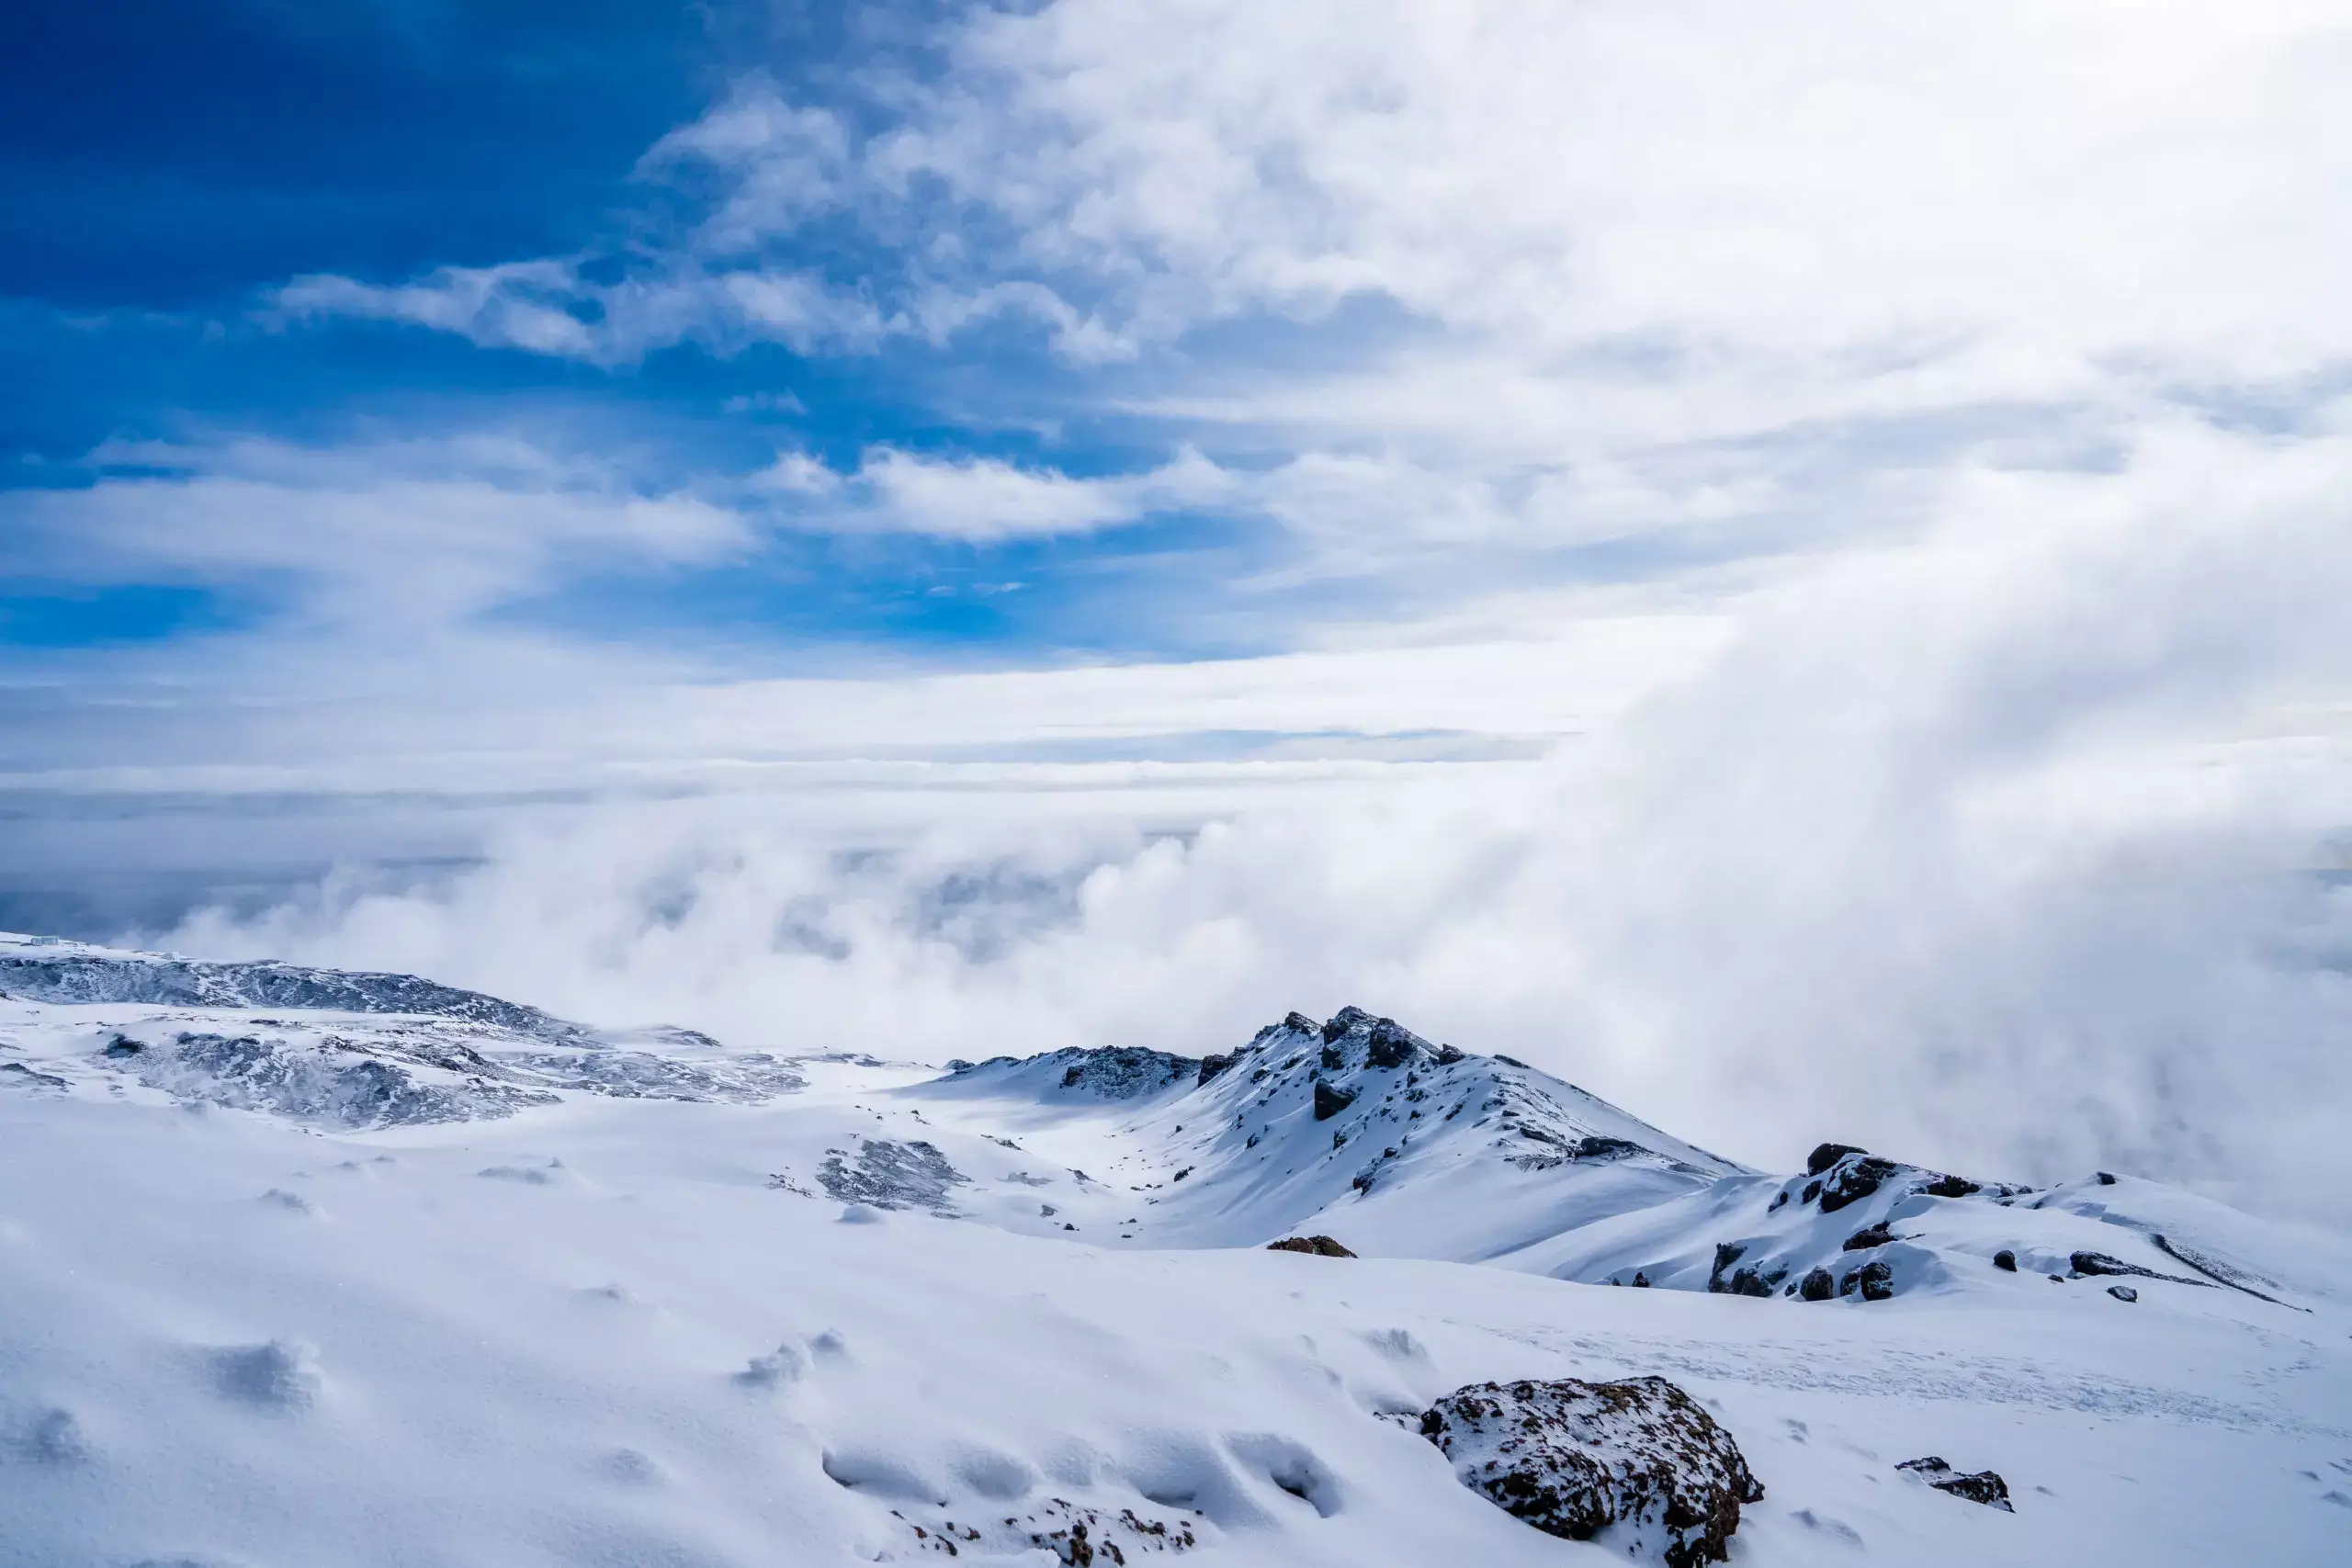 Amazing View of Kilimanjaro mountain filled with snow